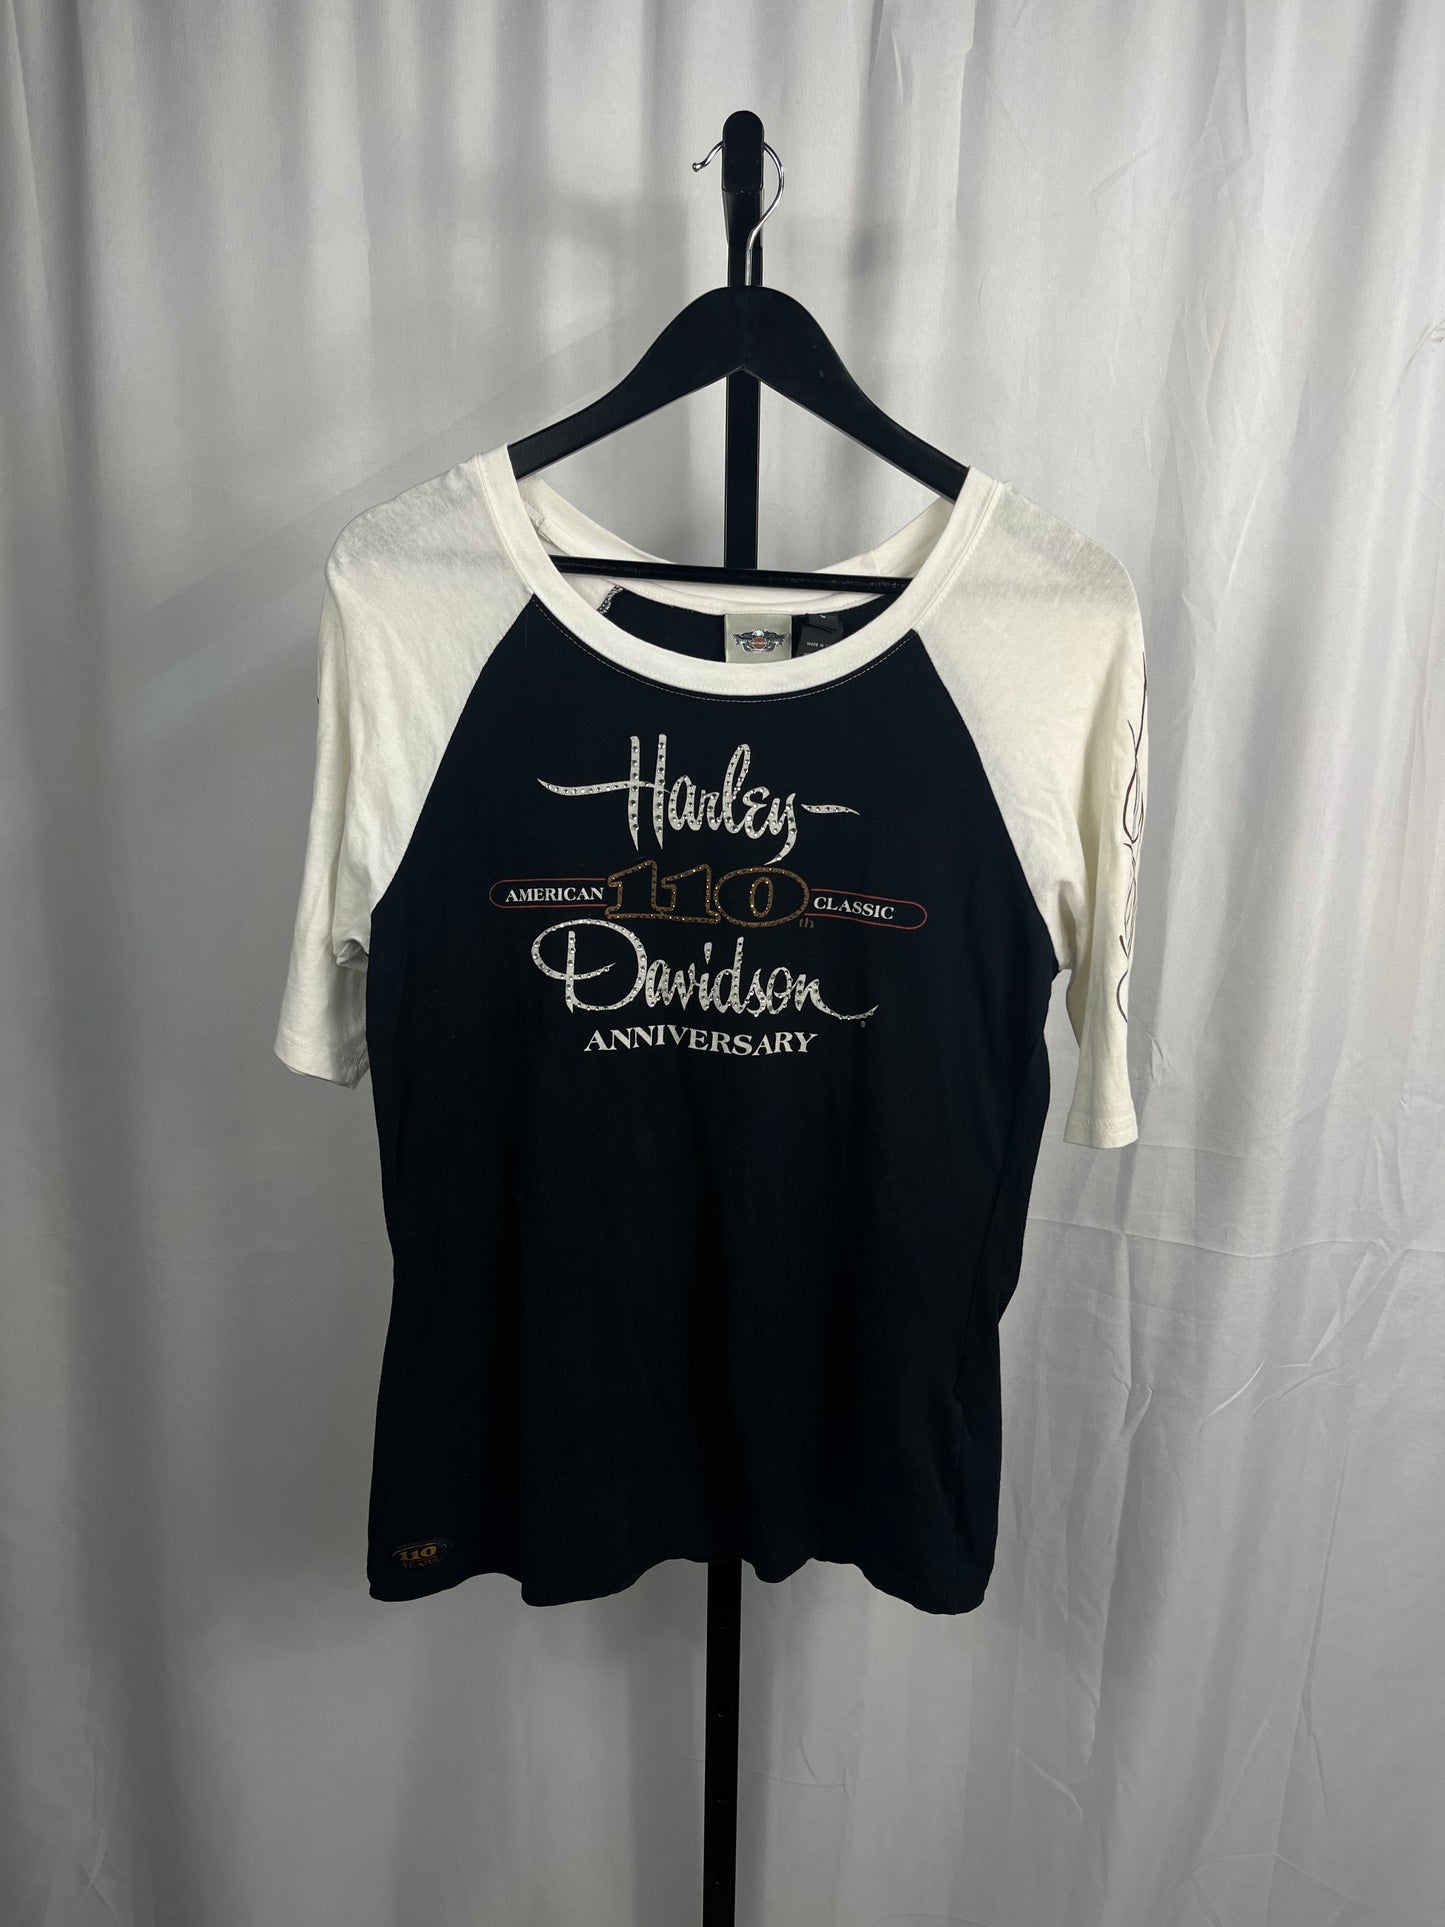 VTG Women’s Harley Davidson “Anniversary” Baseball Tee L